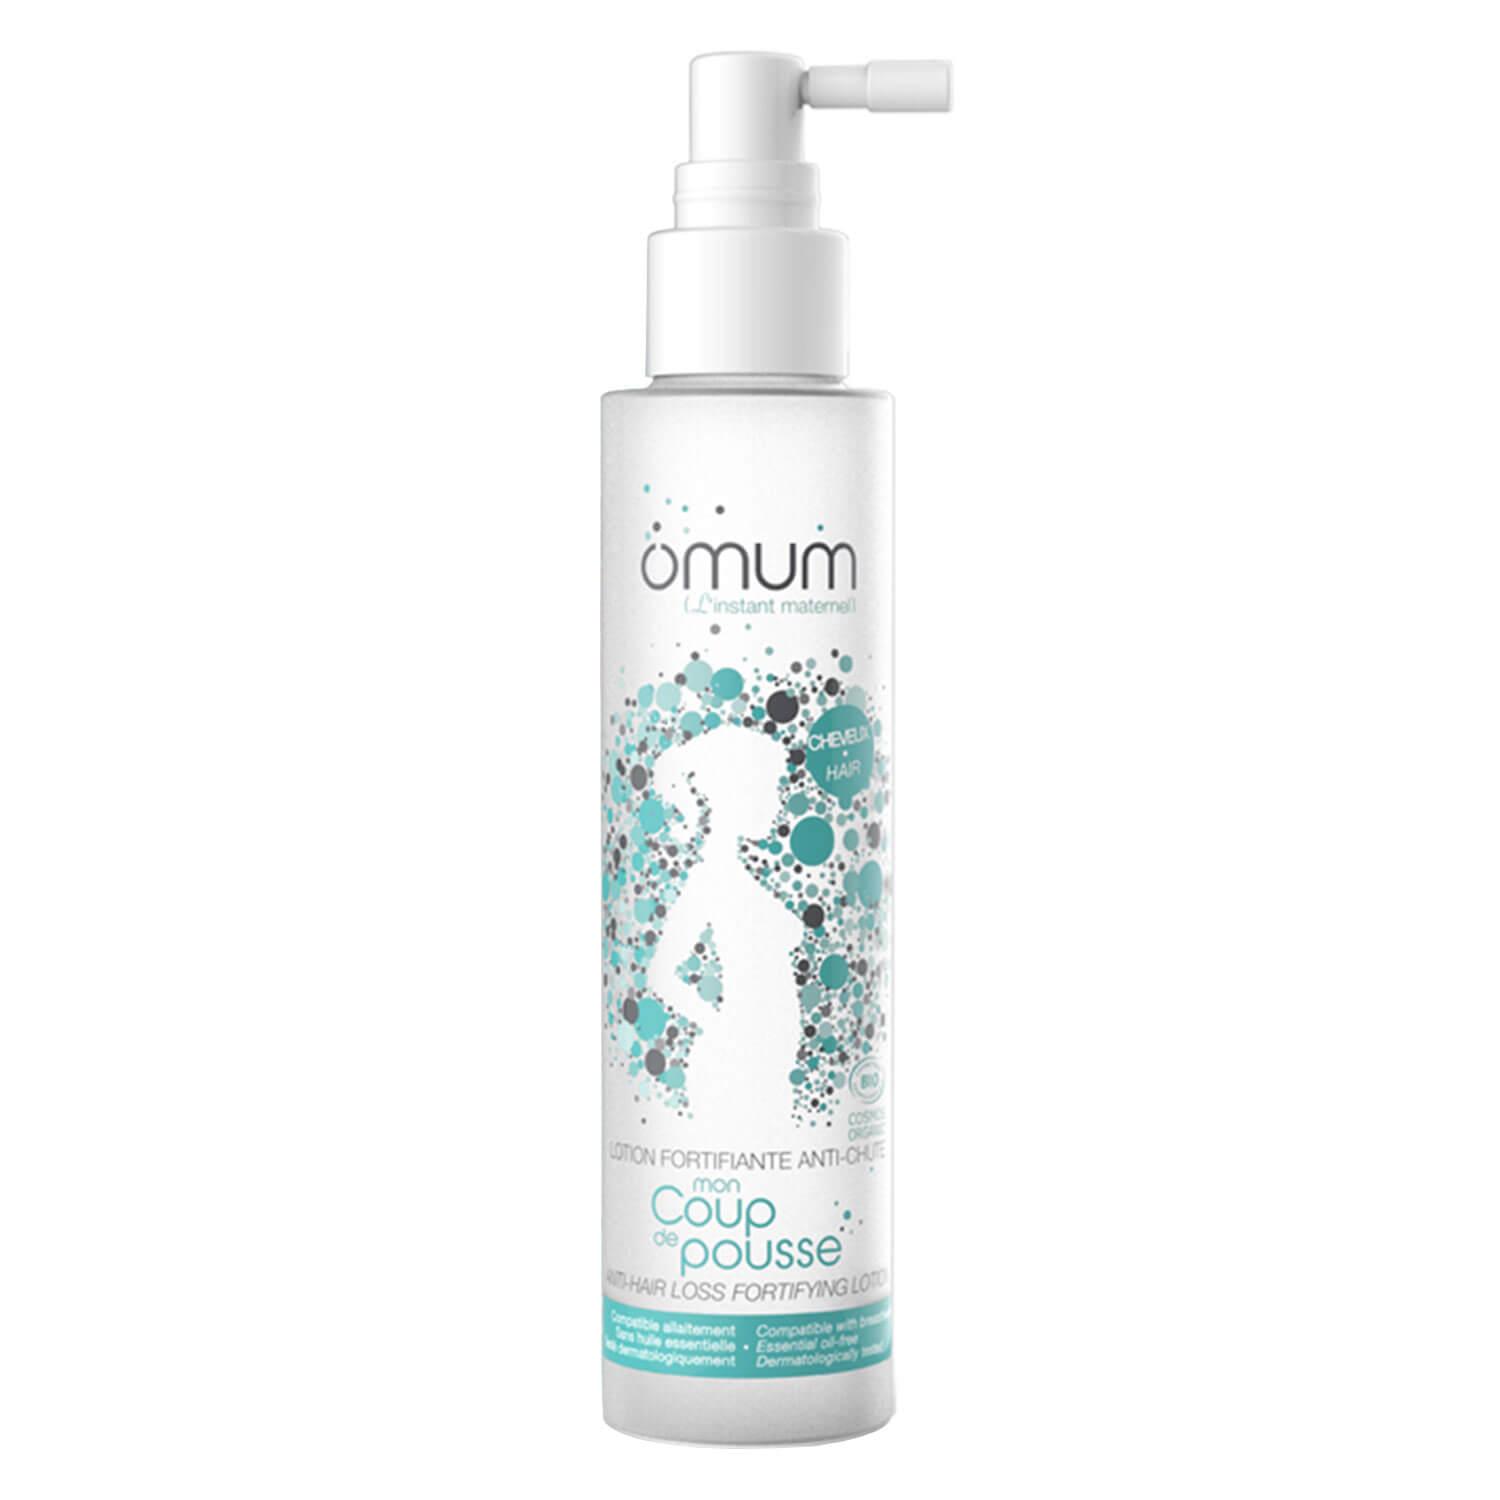 omum - Mon Coup de Pousse Anti-Hair Loss Fortifying Lotion